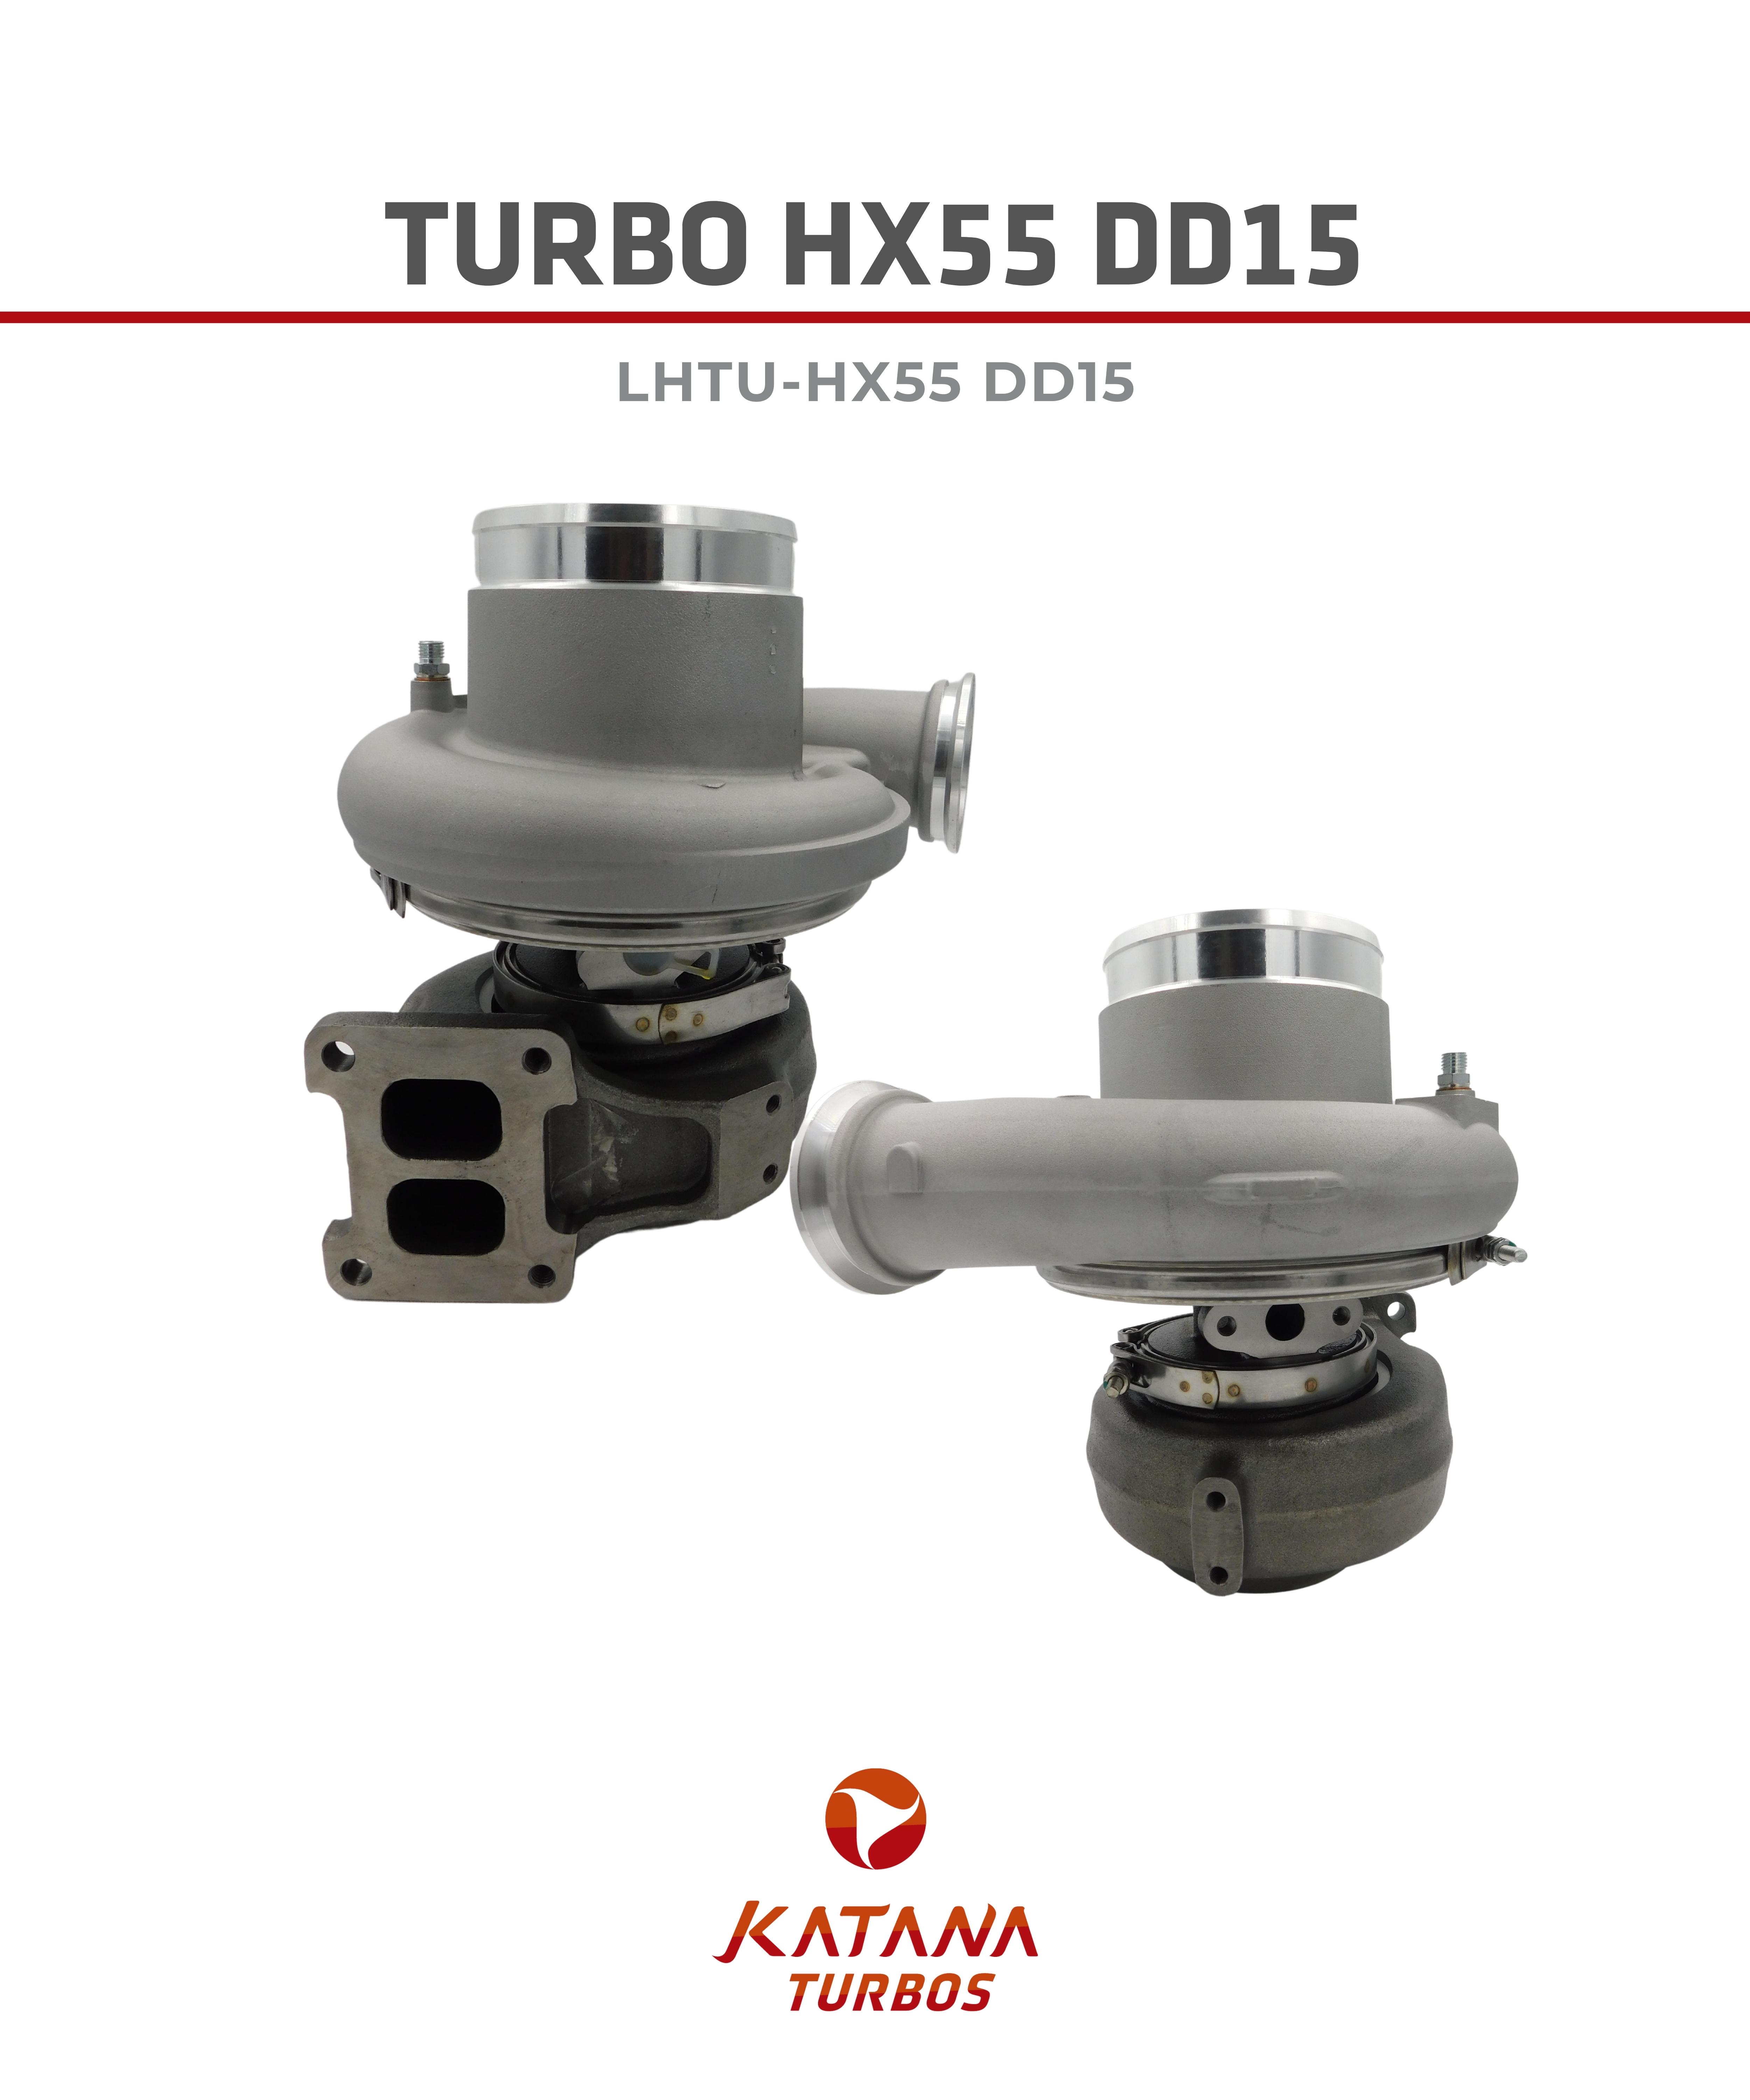 Turbo HX55 DD15